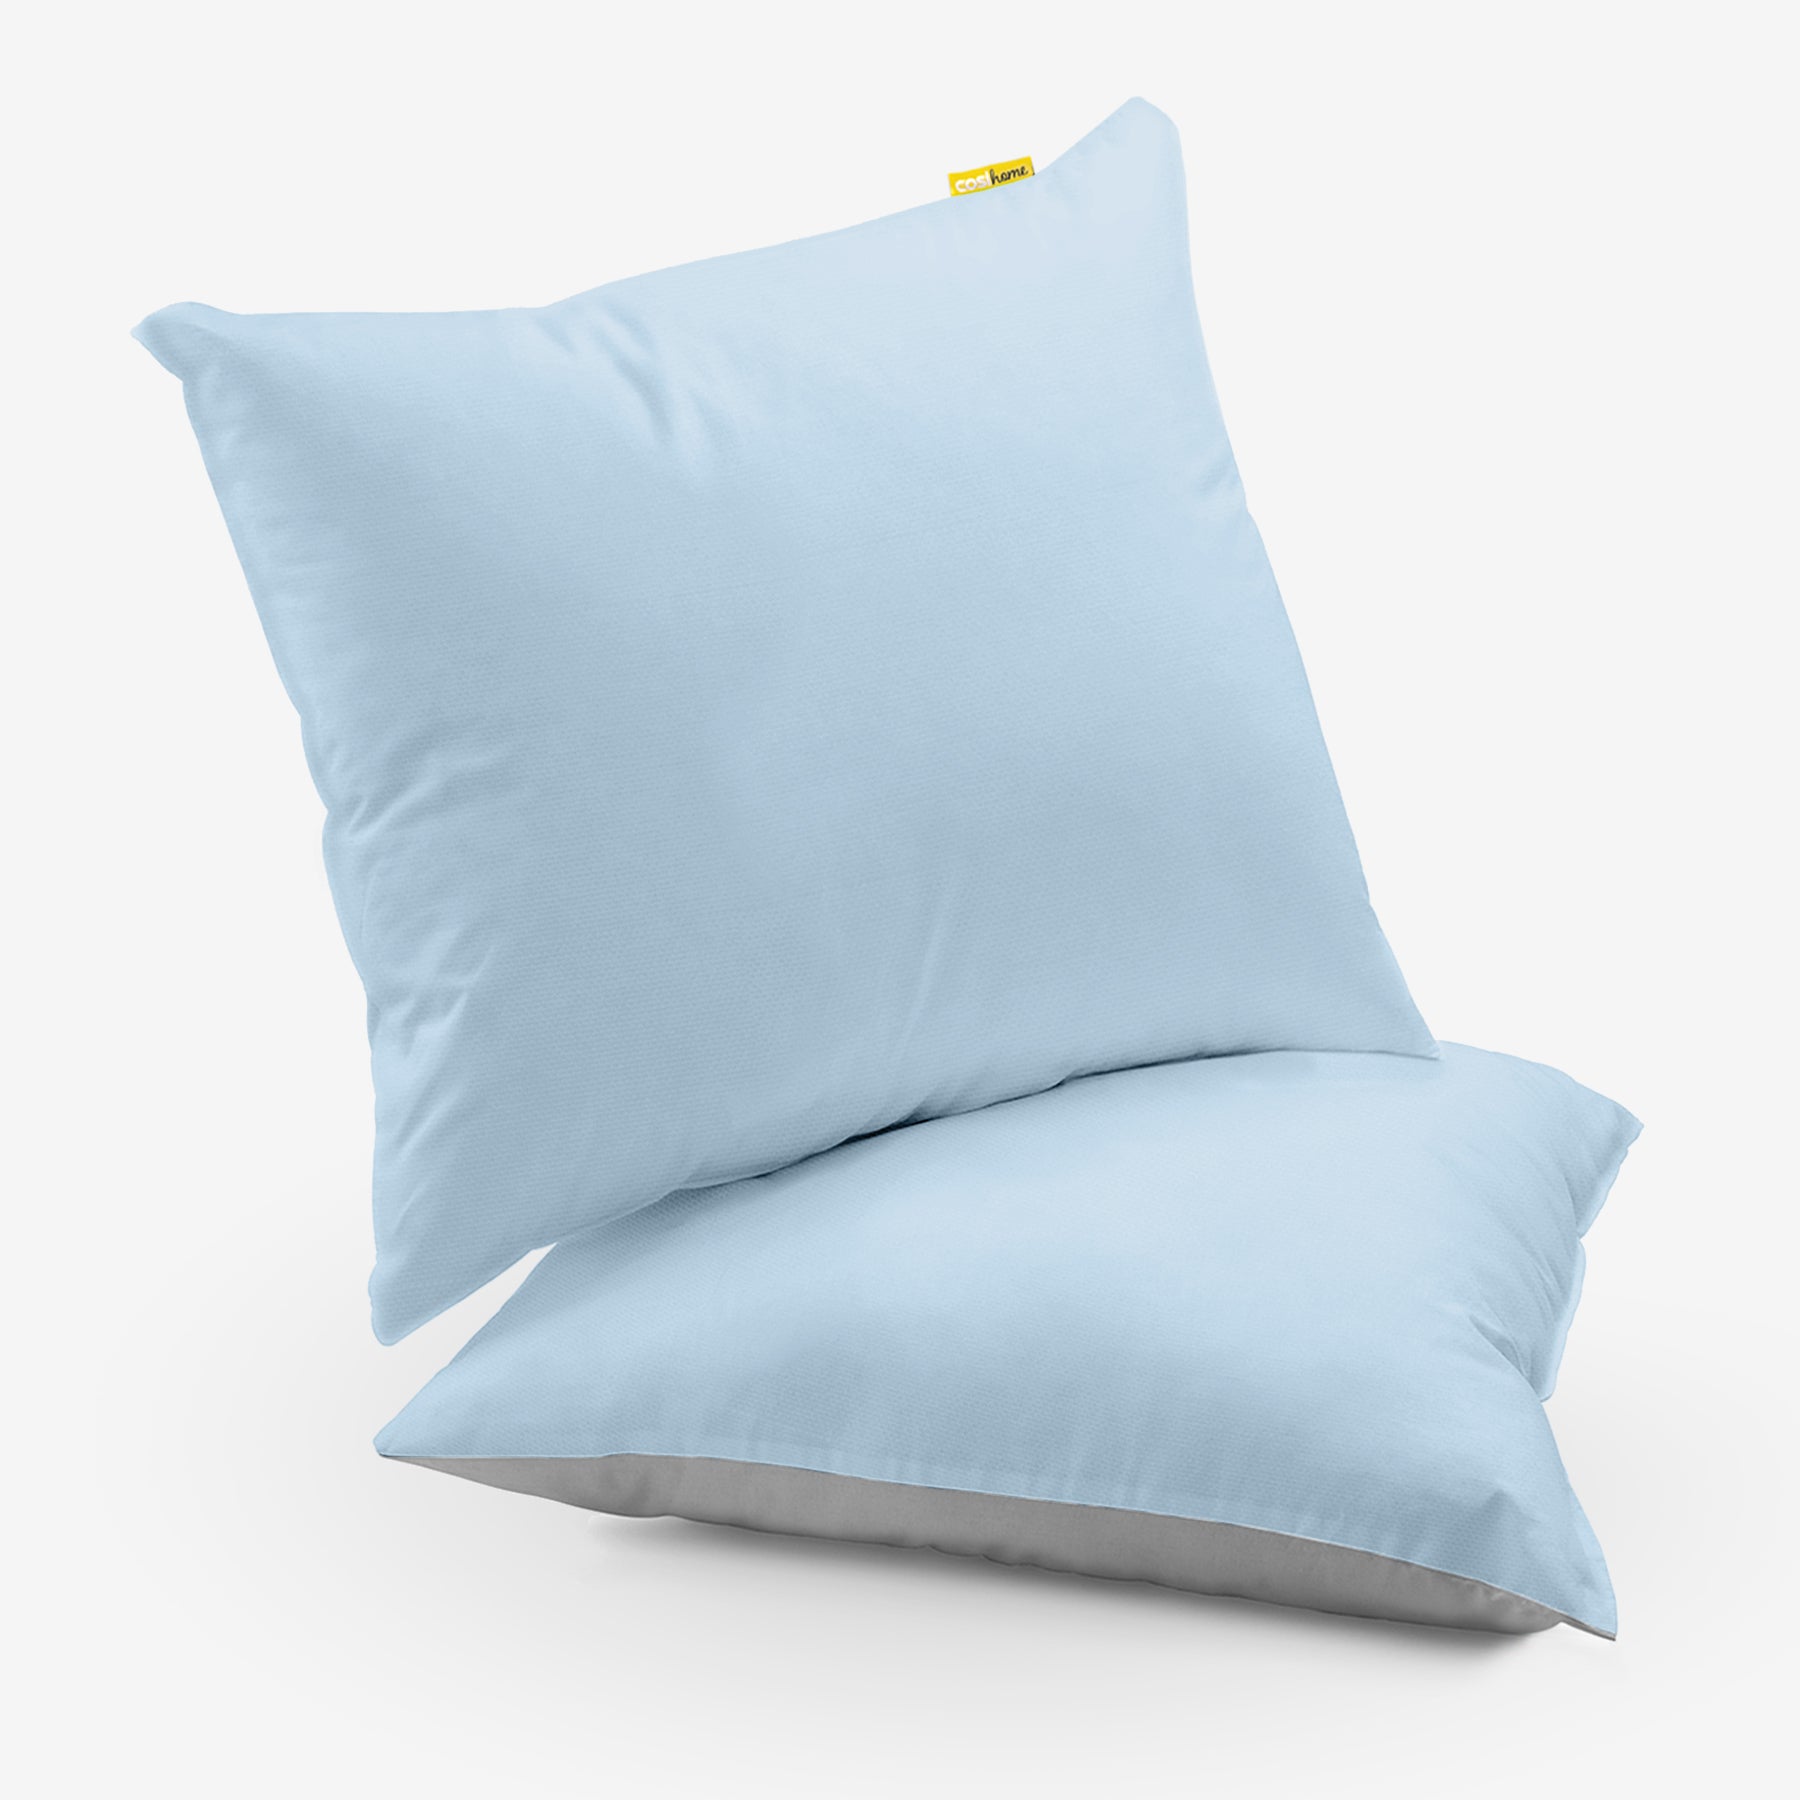 80 x 50 cm Blue Cooling Pillow Case - 2 Pack